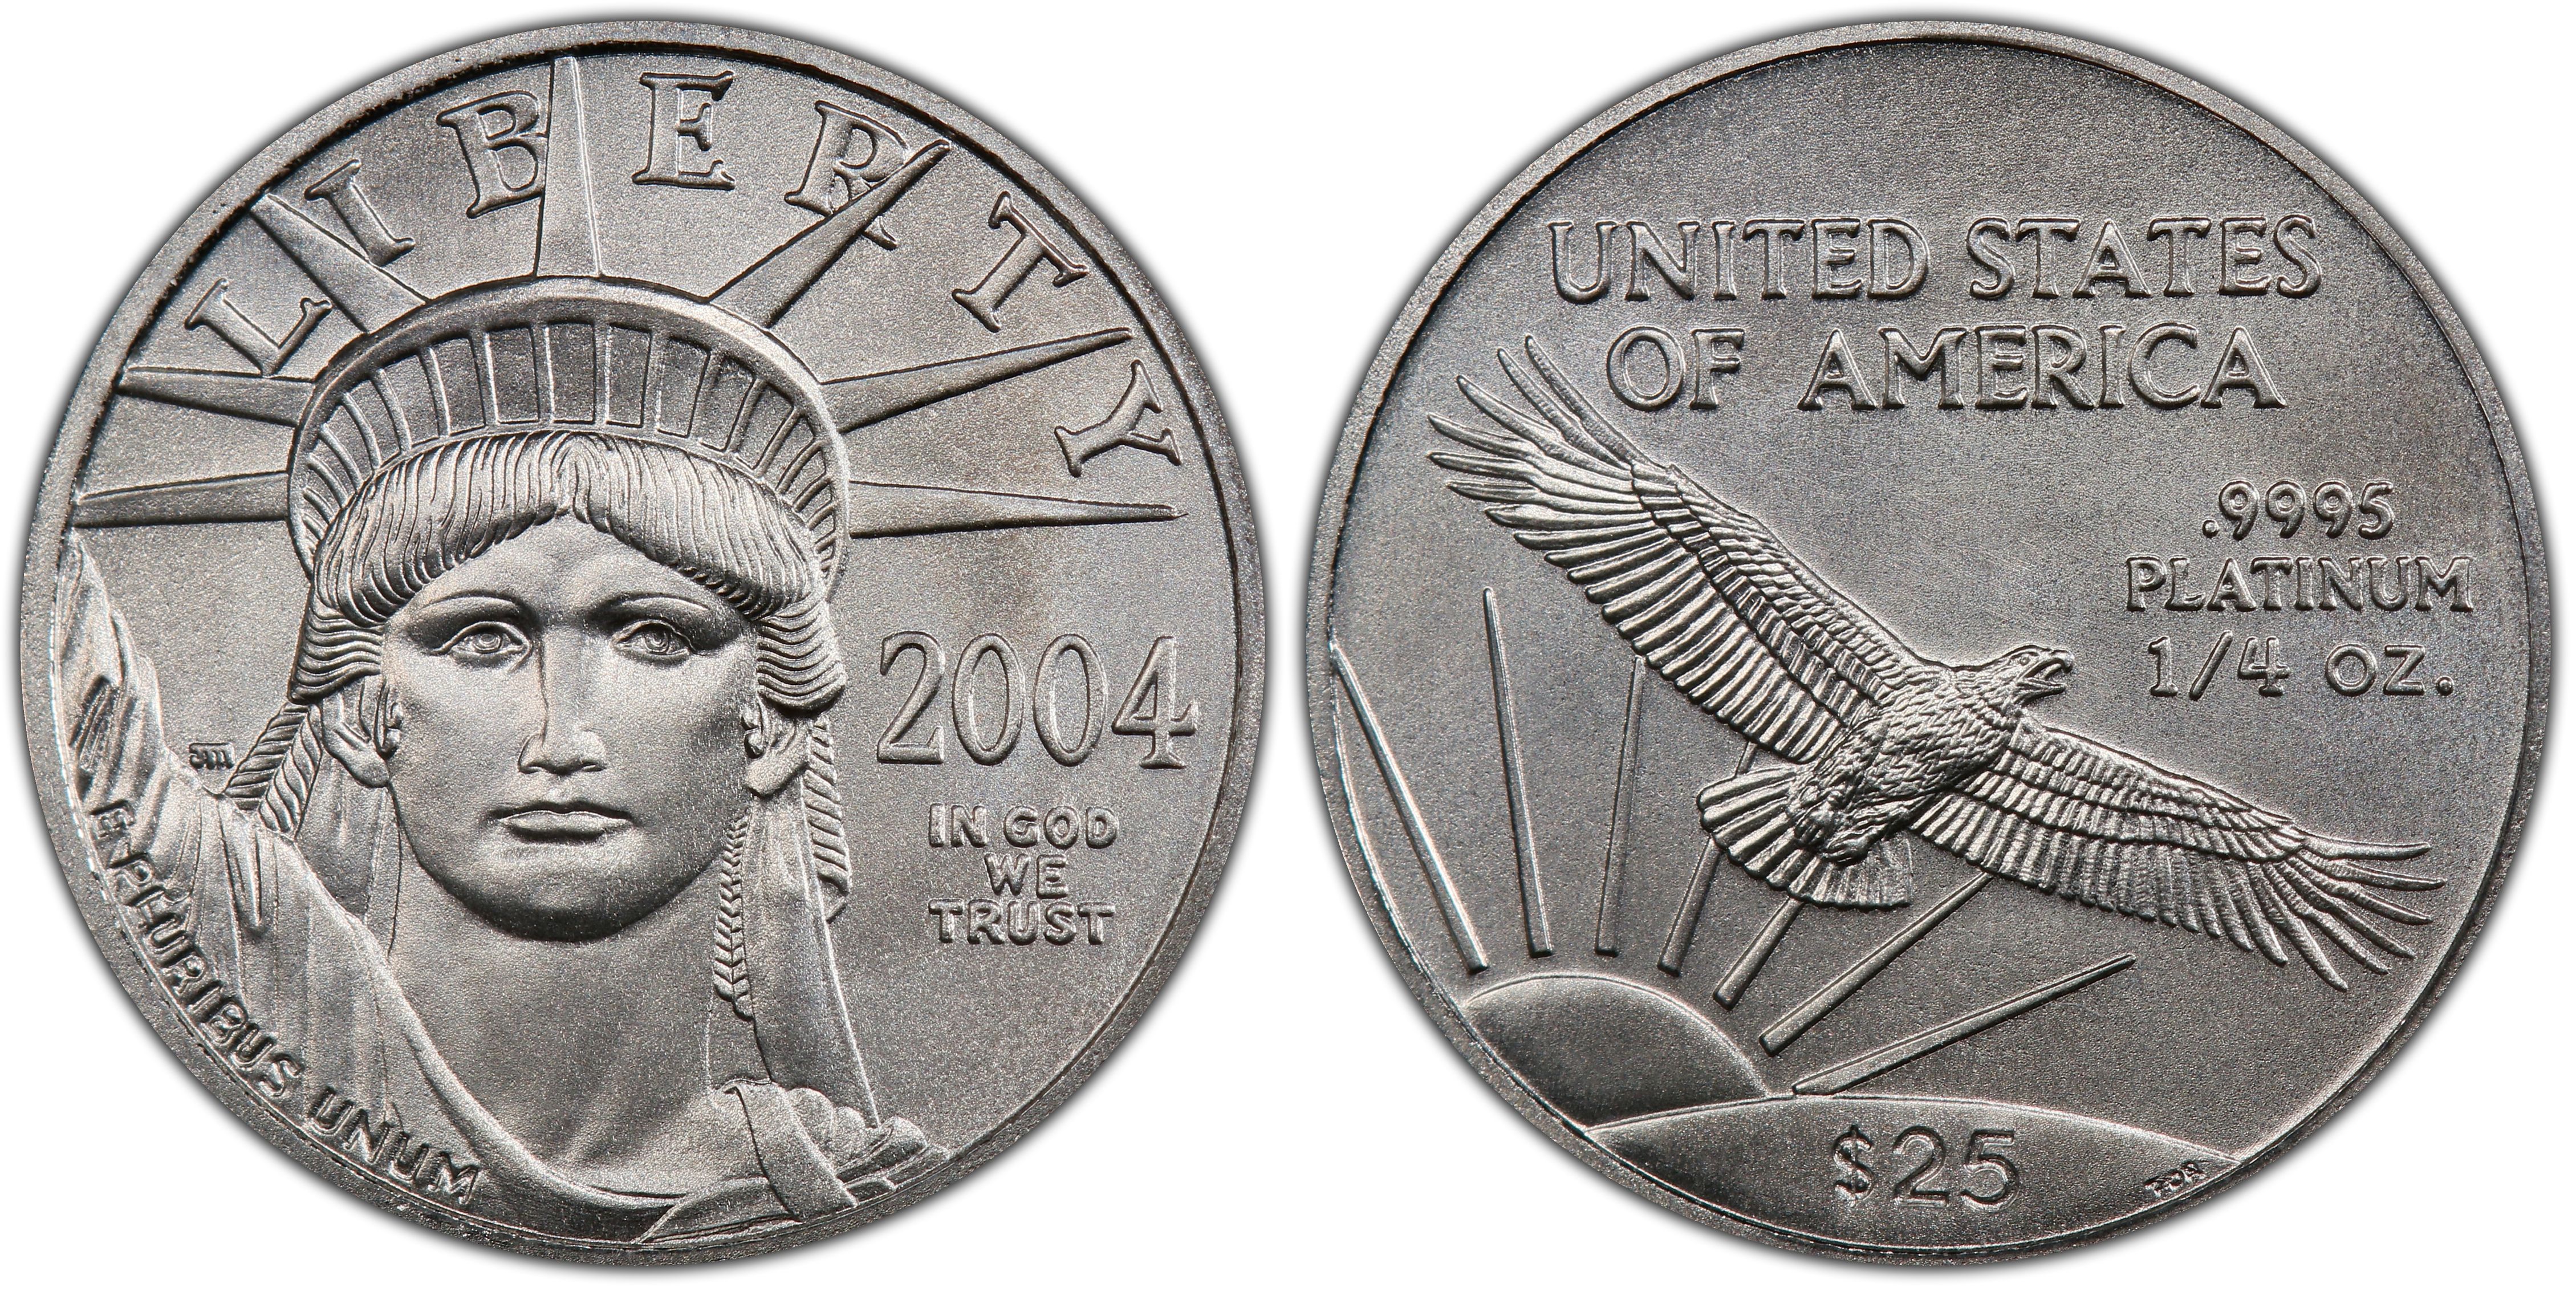 2004 1/4 oz $25 Platinum American Eagle NGC MS 69 